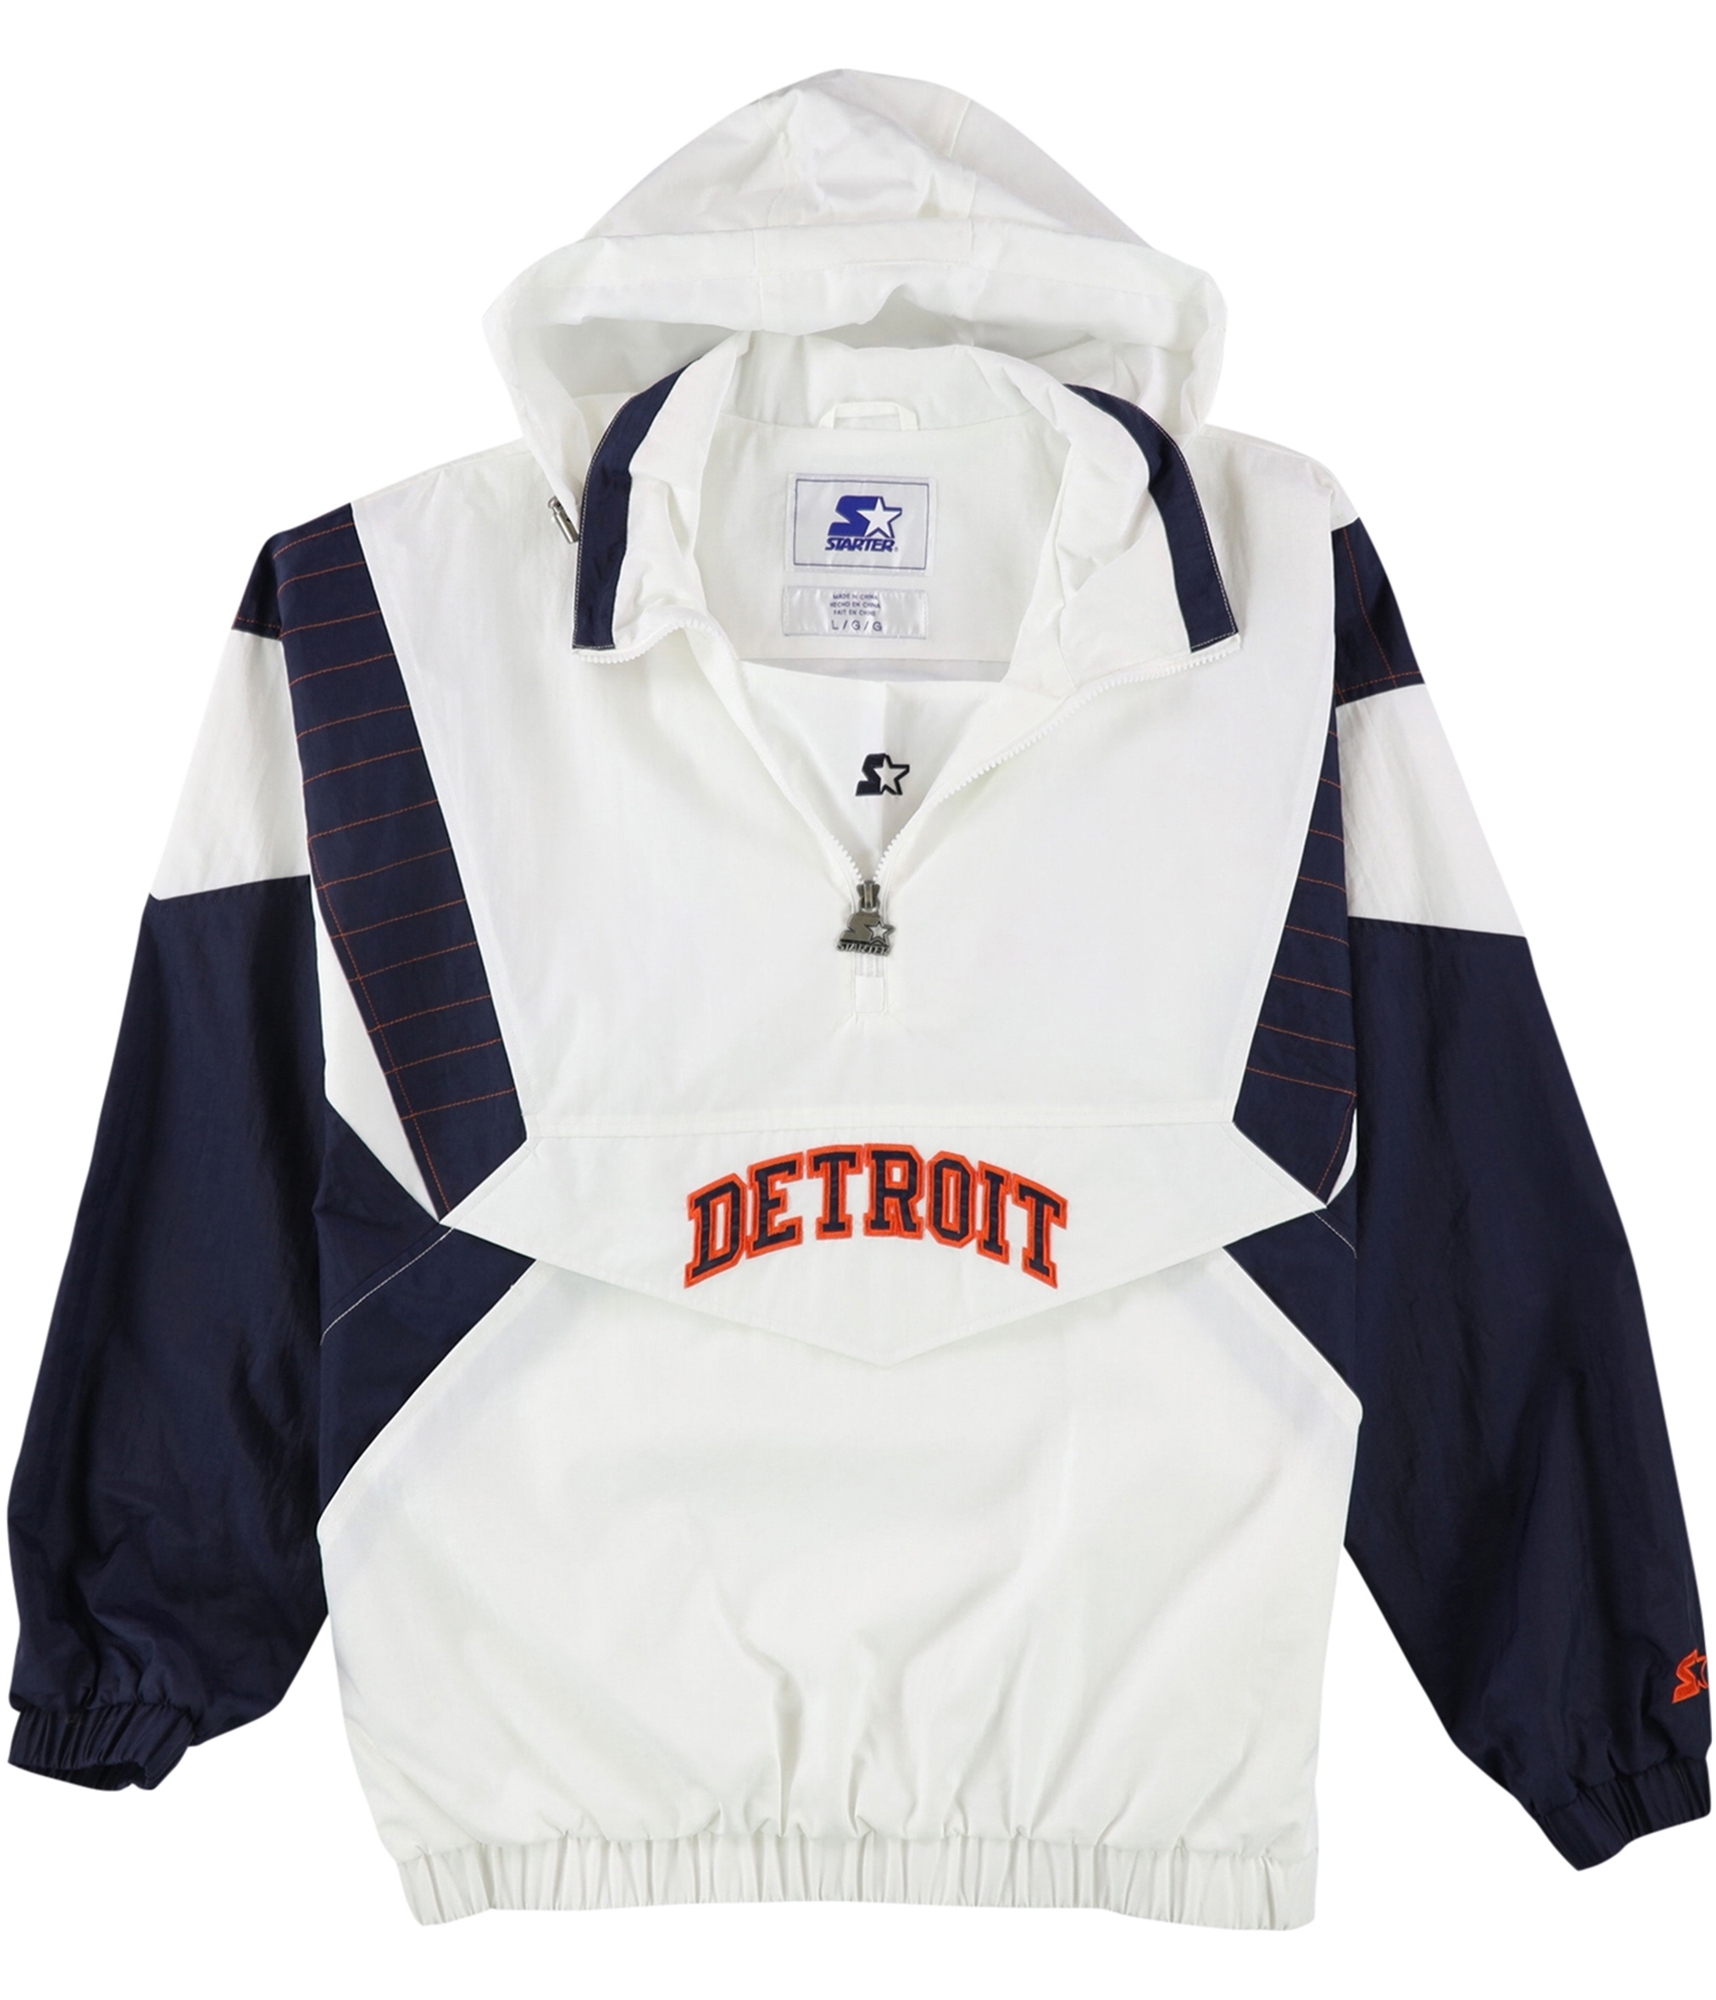 STARTER Mens Detroit Tigers Anorak Jacket, White, Large